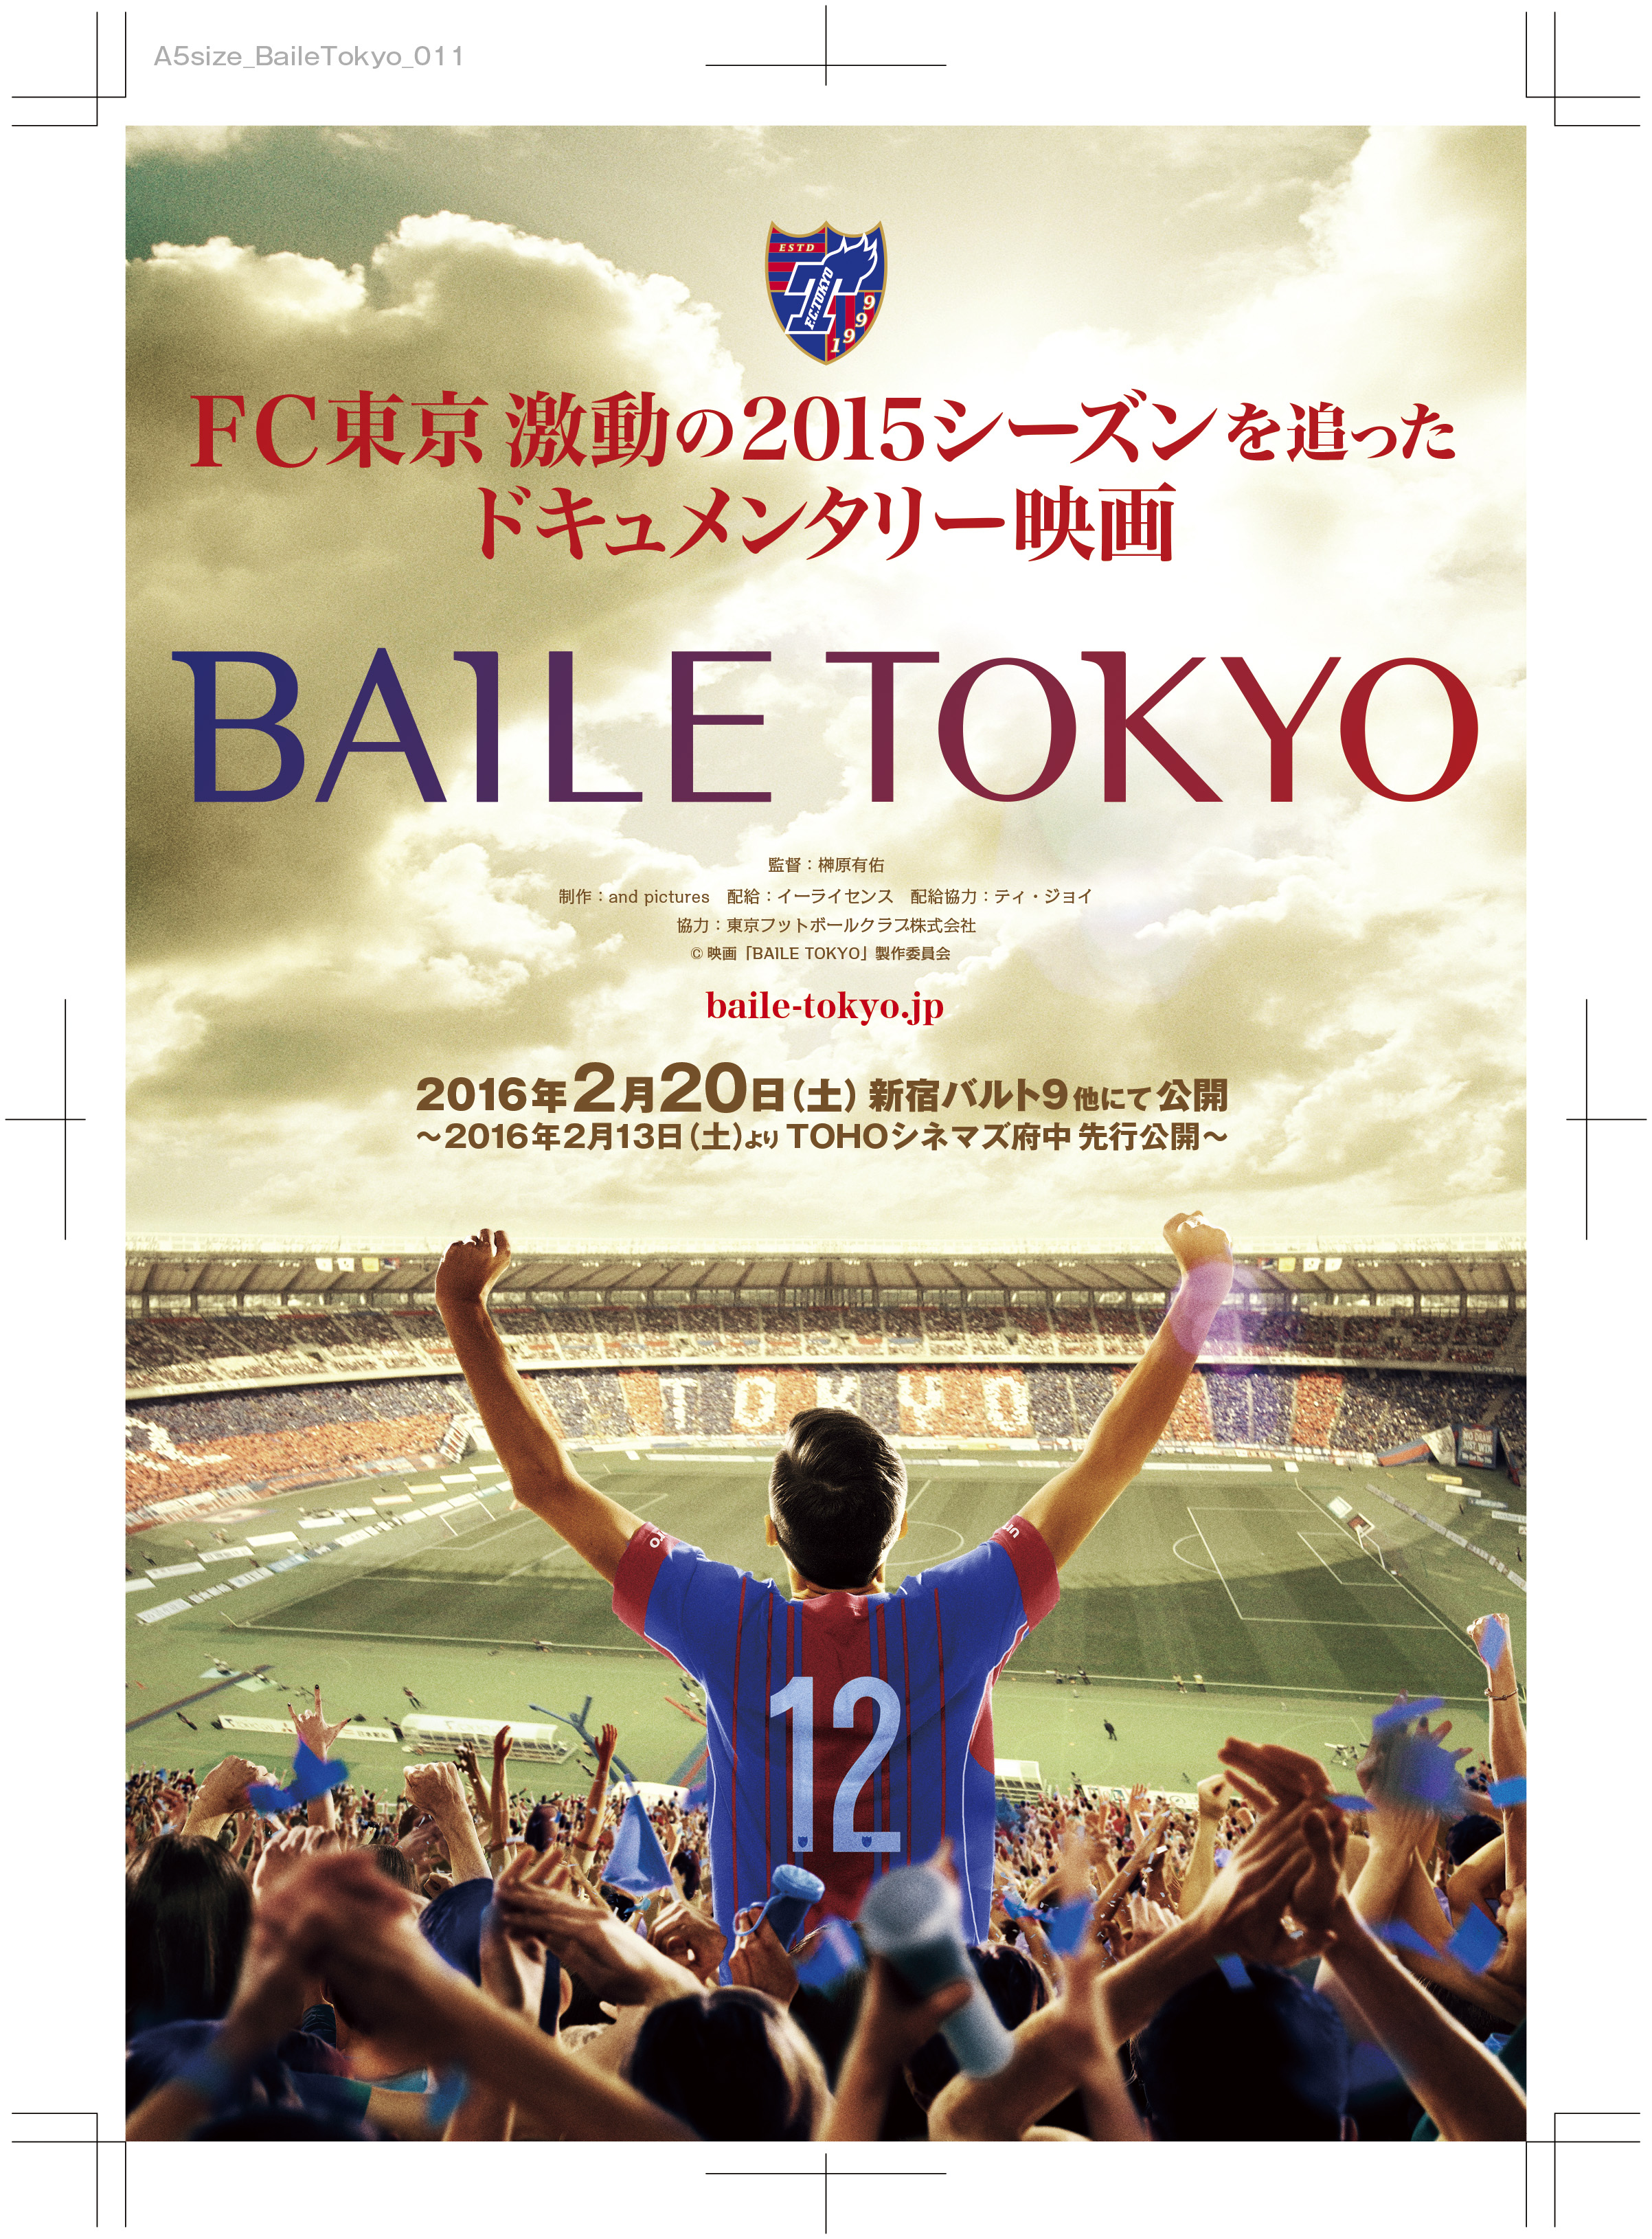 Fc東京のドキュメンタリー映画 Baile Tokyo Rip Slymeの楽曲が主題歌に決定 フットボールゾーン